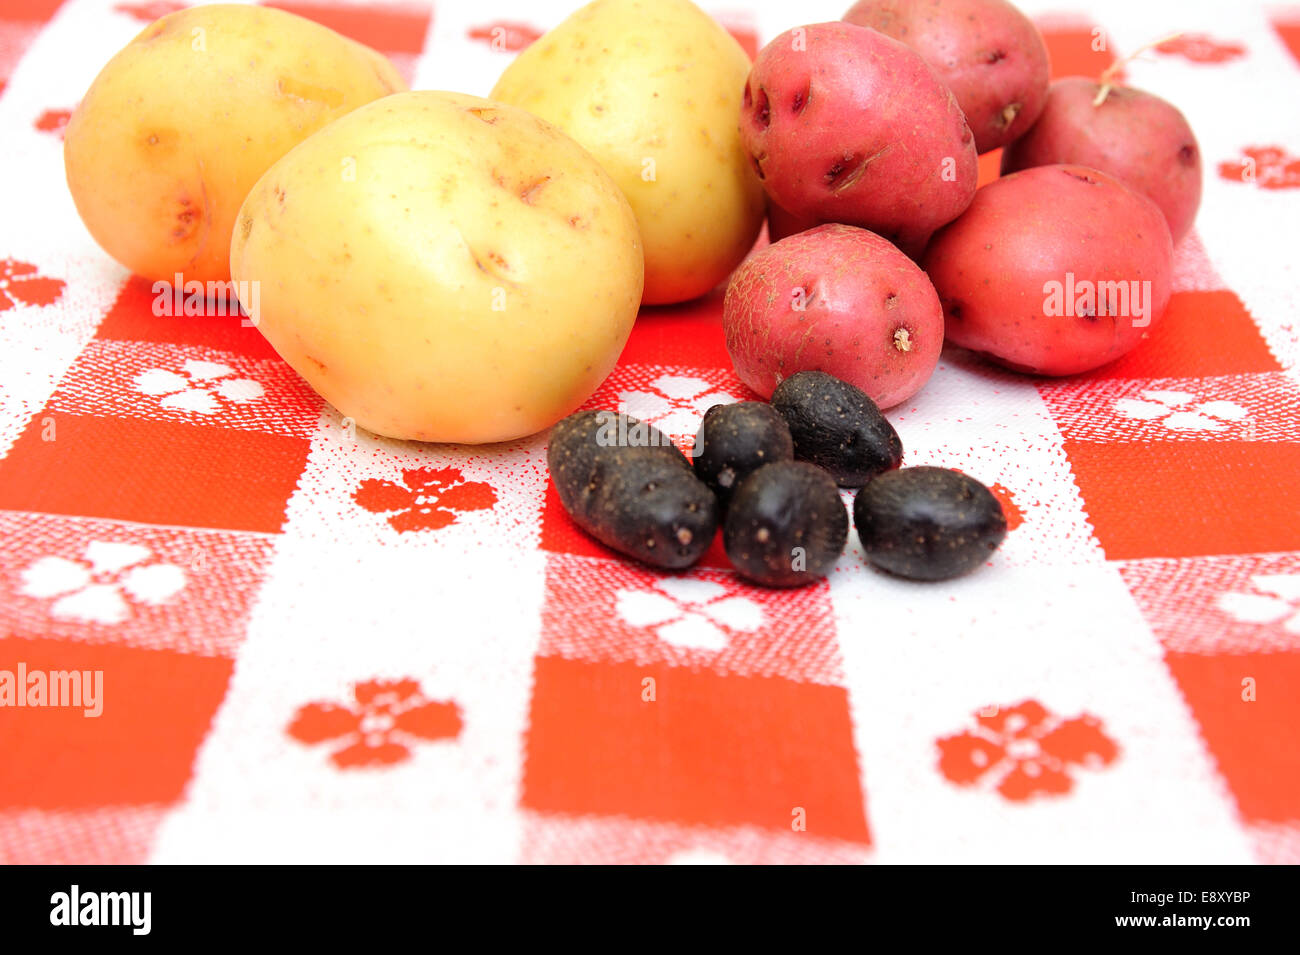 Red, white and purple peruvian potato Stock Photo